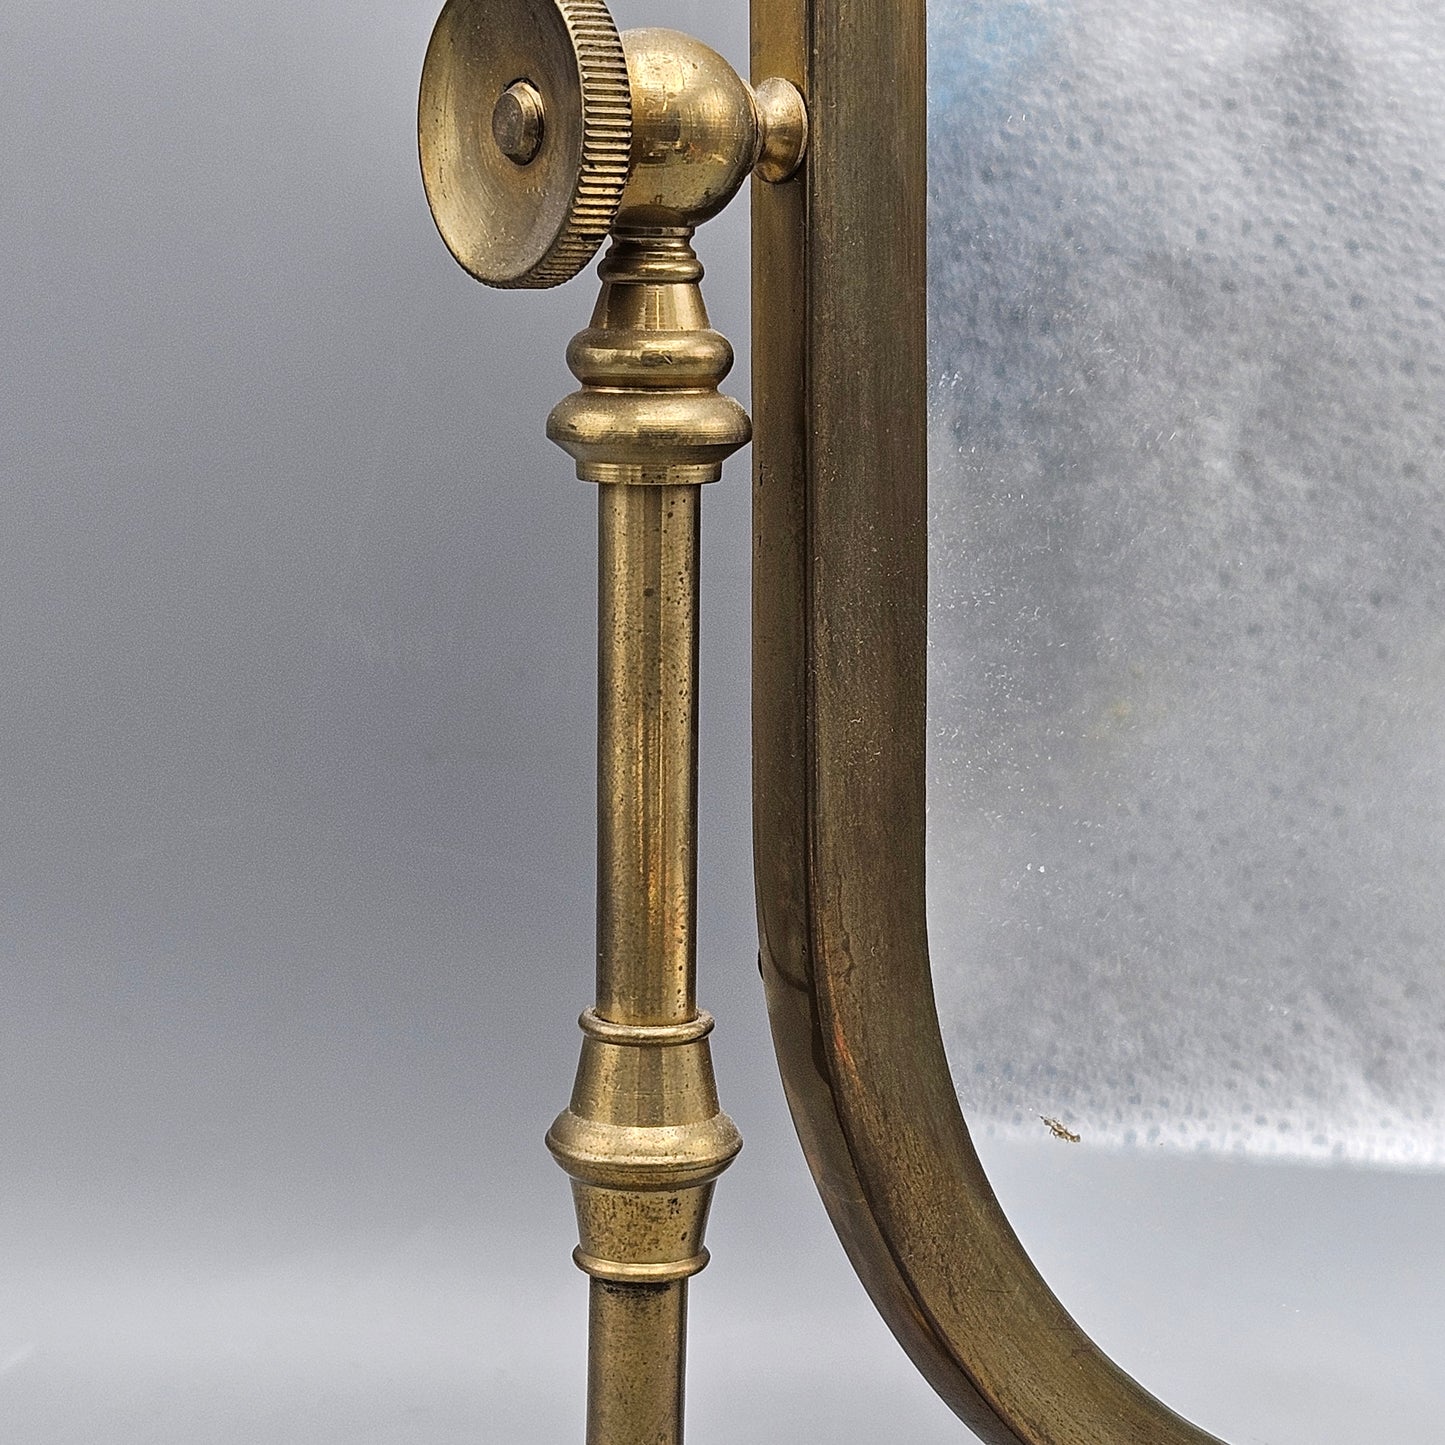 Vintage Petit Brass Cheval Vanity Mirror